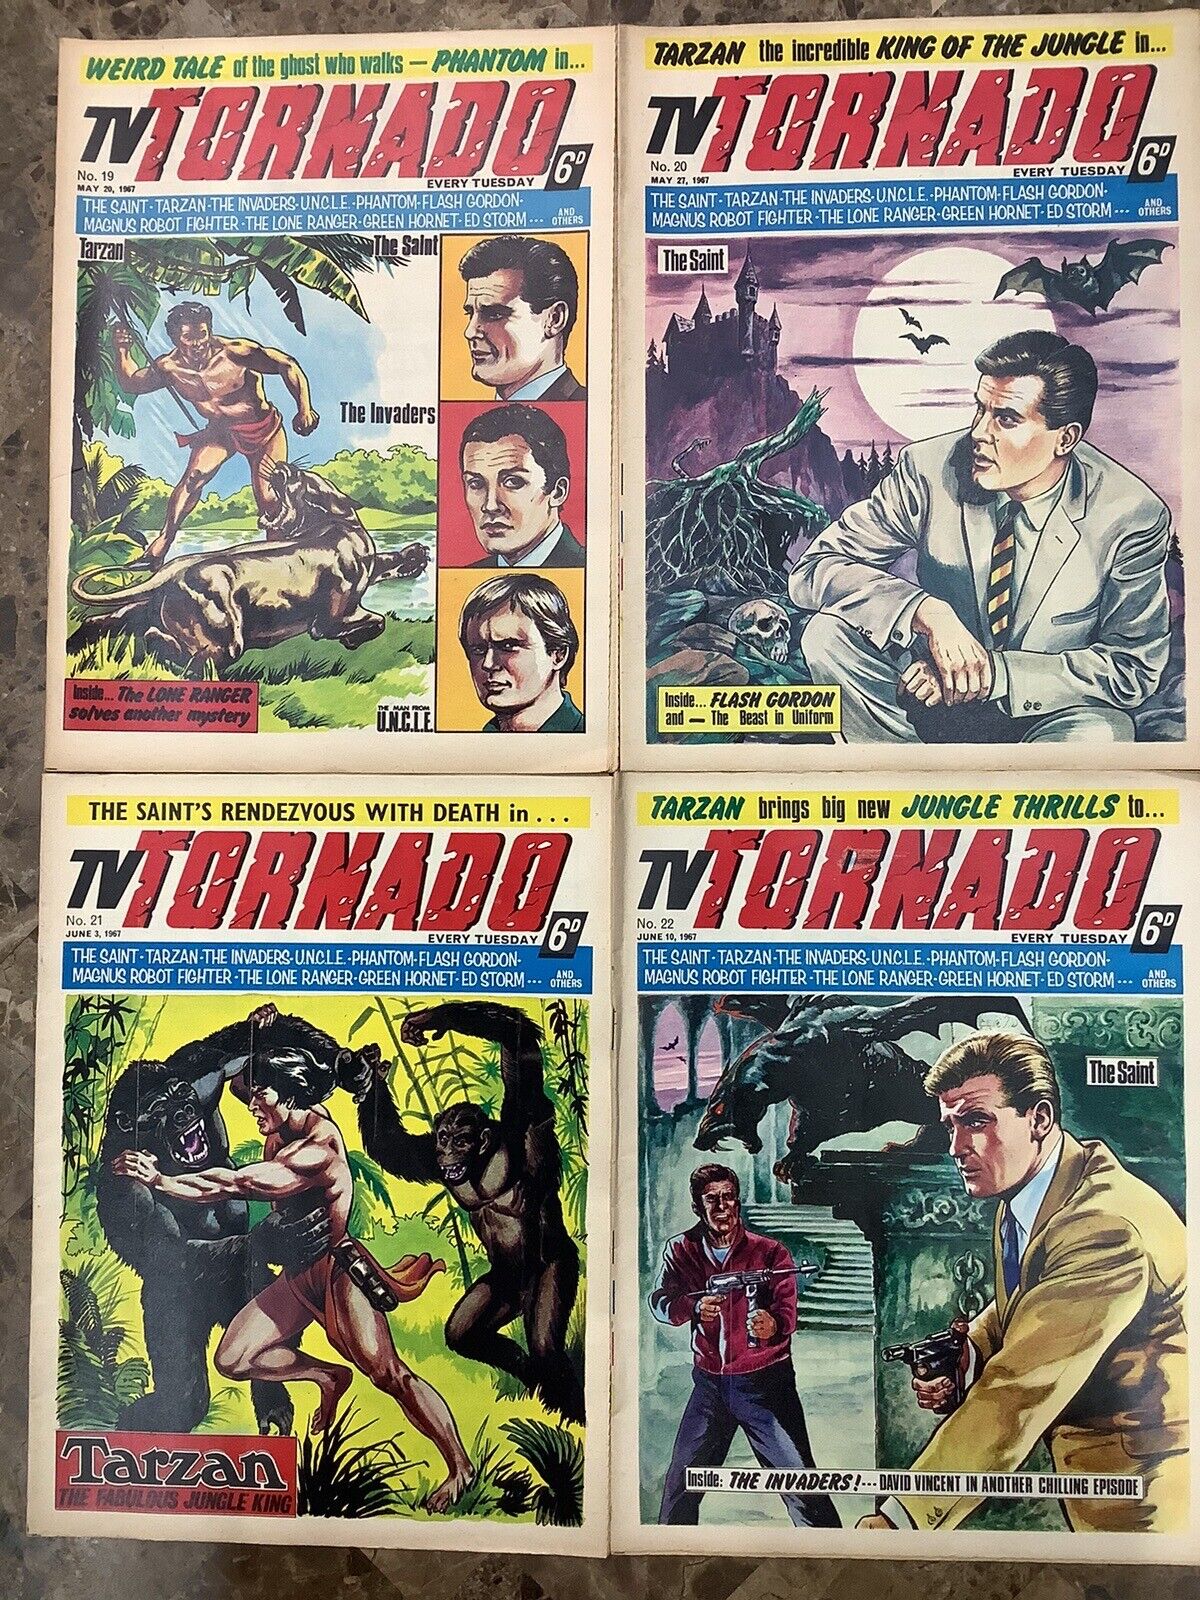 TV Tornado #19 #20 #21 #22 Magazines 1967: Tarzan / Flash Gordon / Invaders